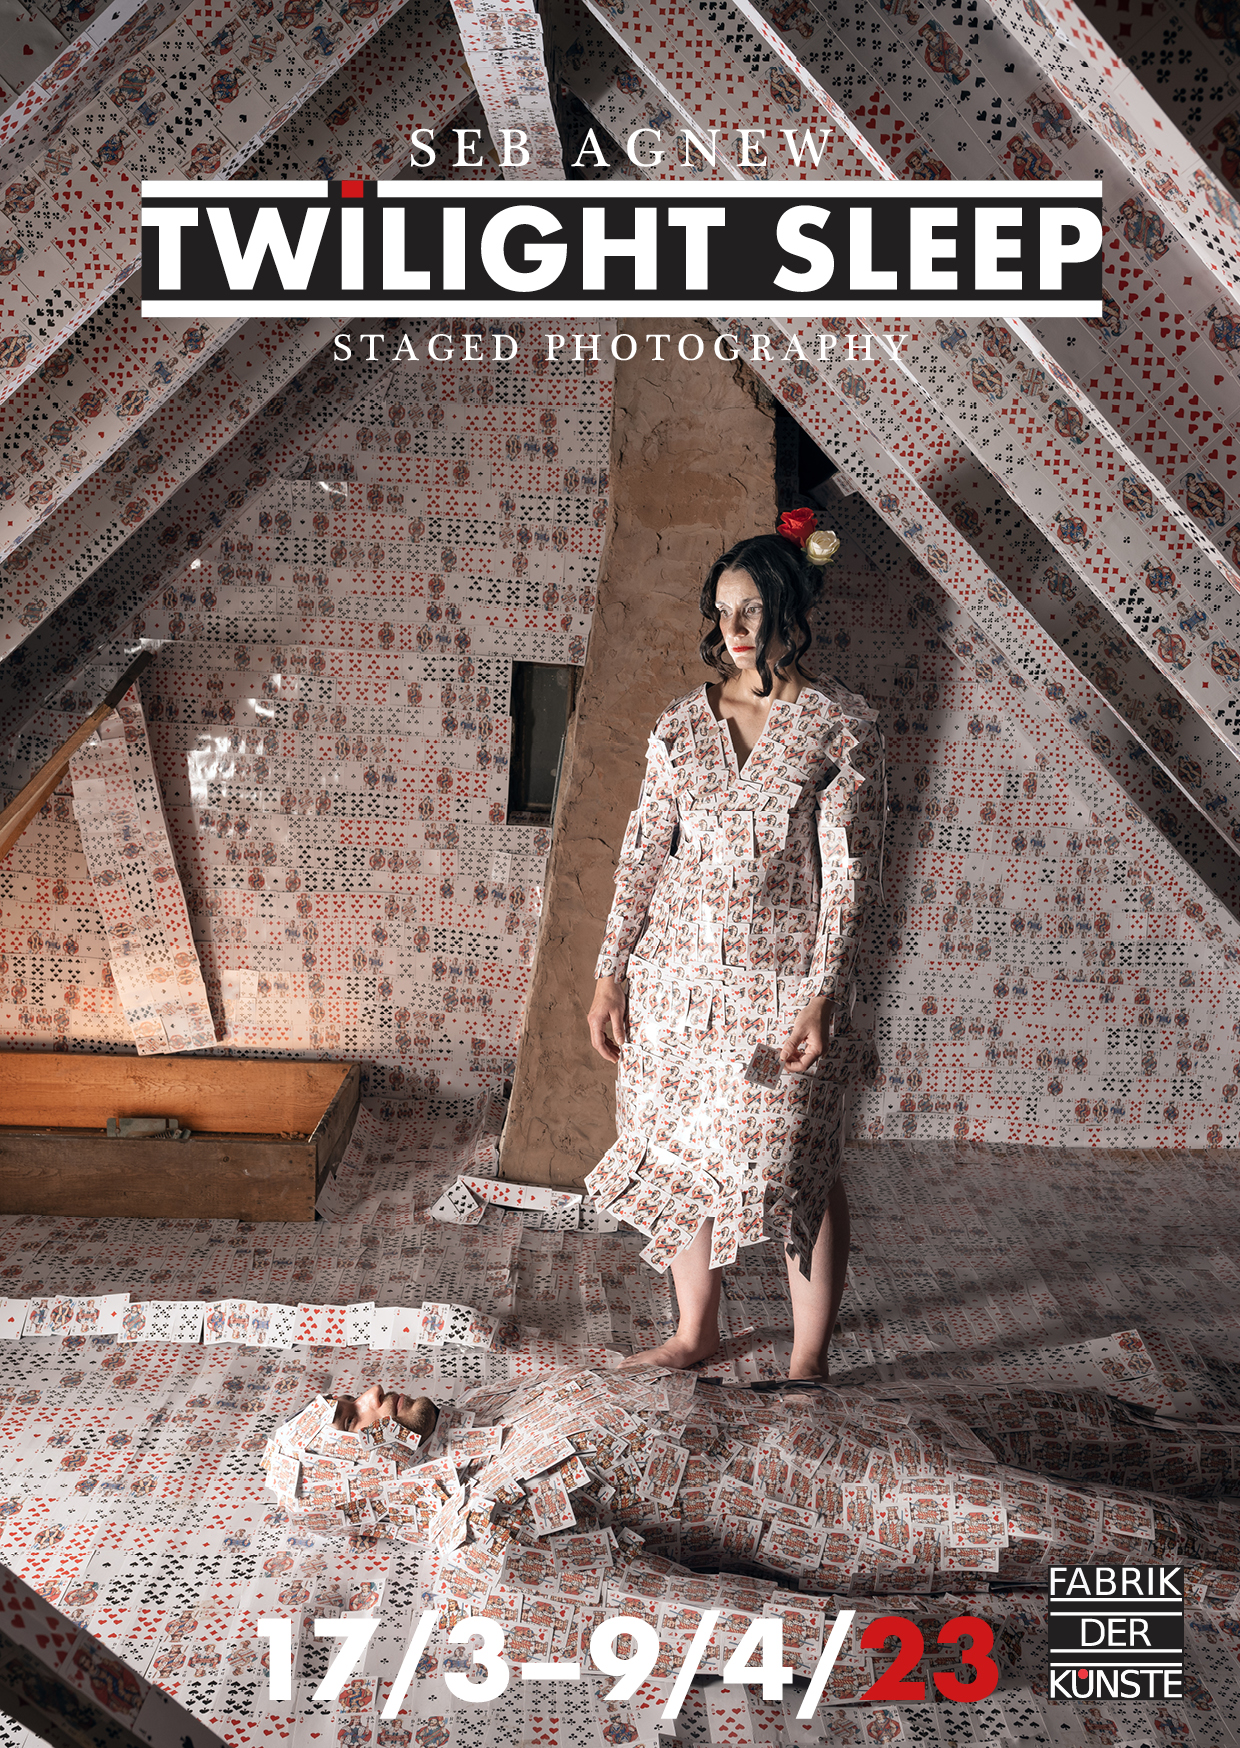 Seb Agnew’s Solo Show Dämmerschlaf ("Twilight Sleep")